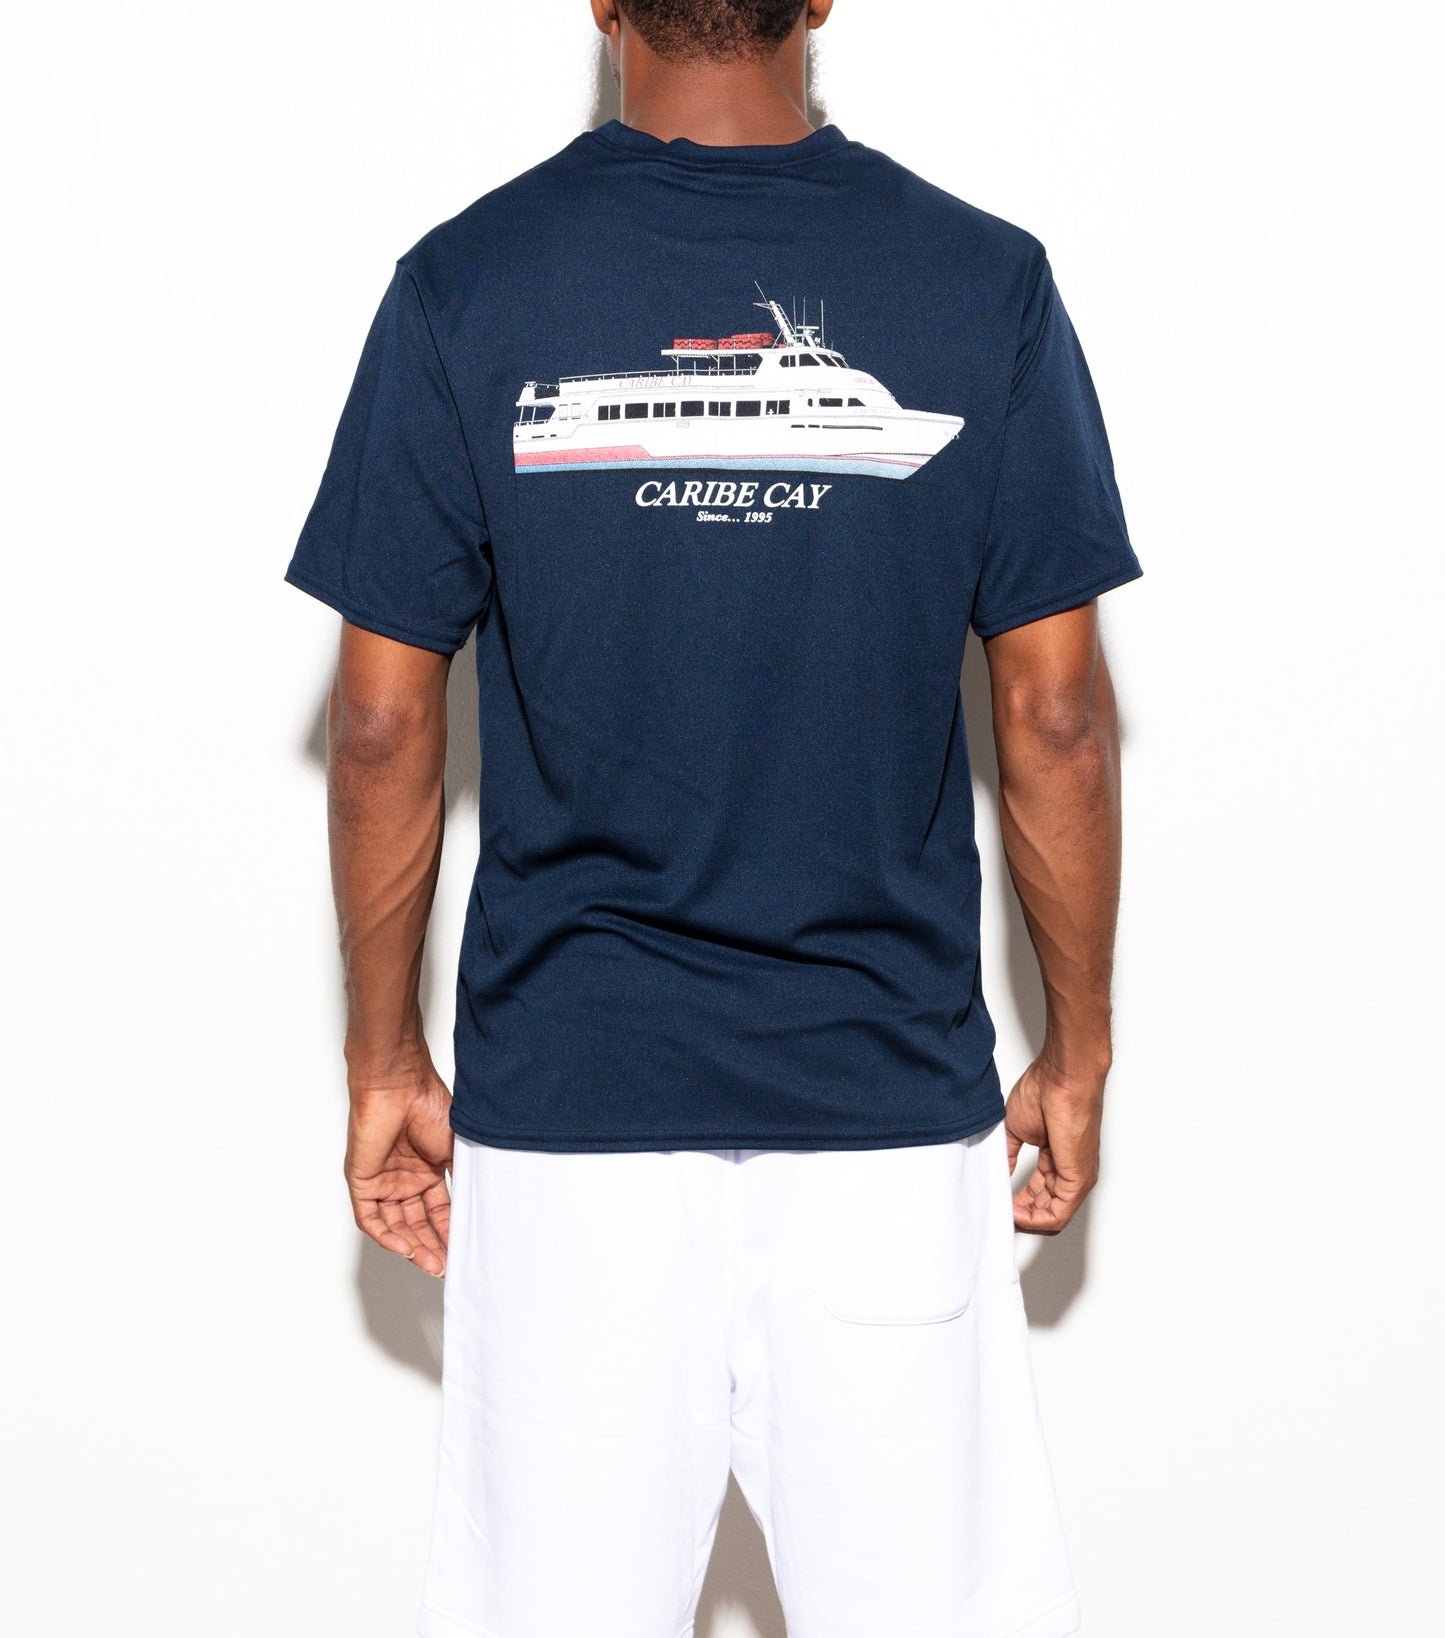 Long/Short Sleeve Performance T-Shirt Caribe Cay